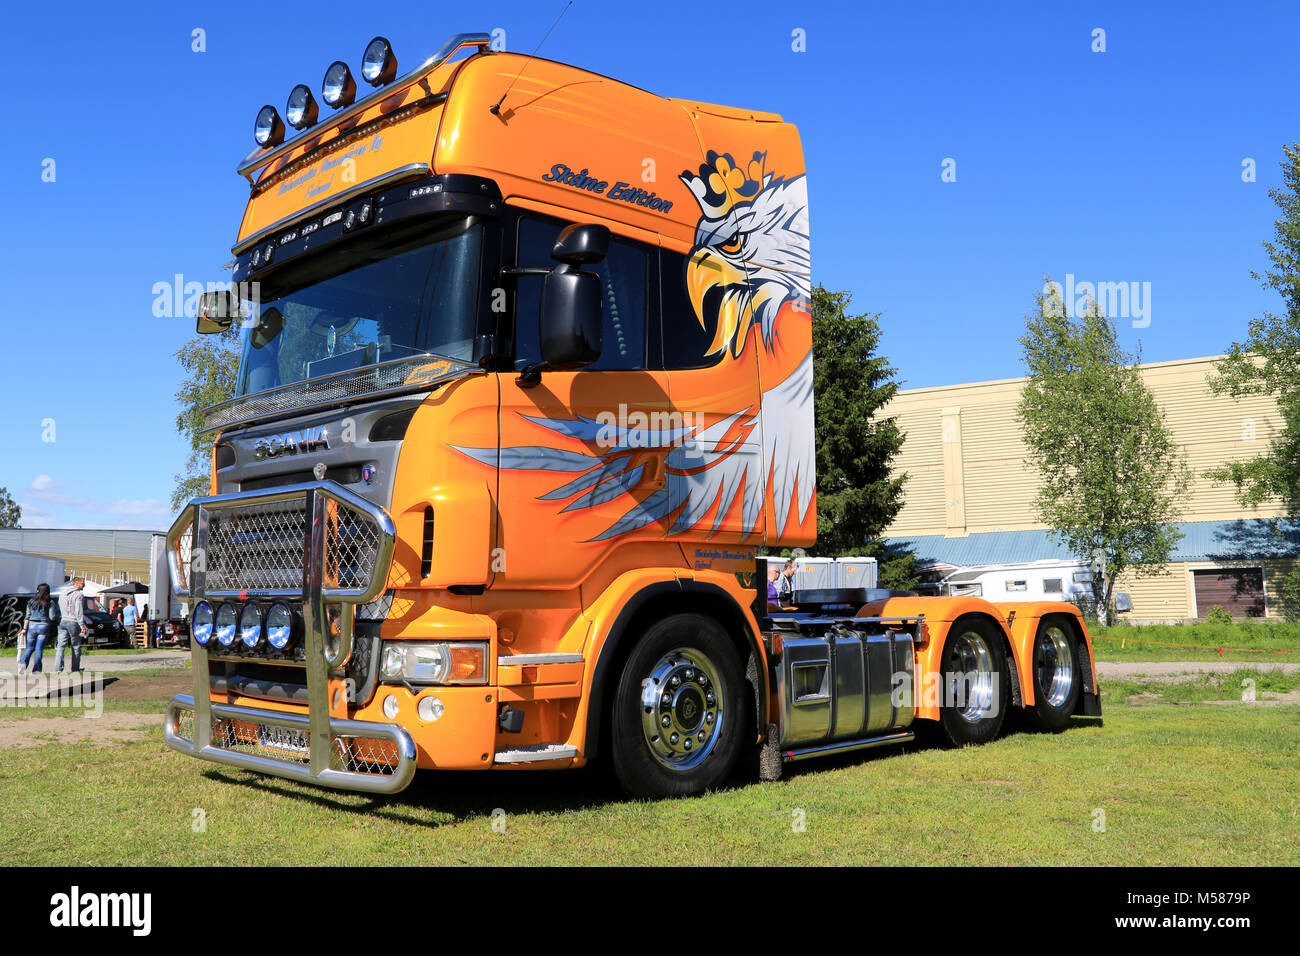 PORVOO, Finnland - 28. JUNI 2014: Scania V8 Skane Edition Lkw auf